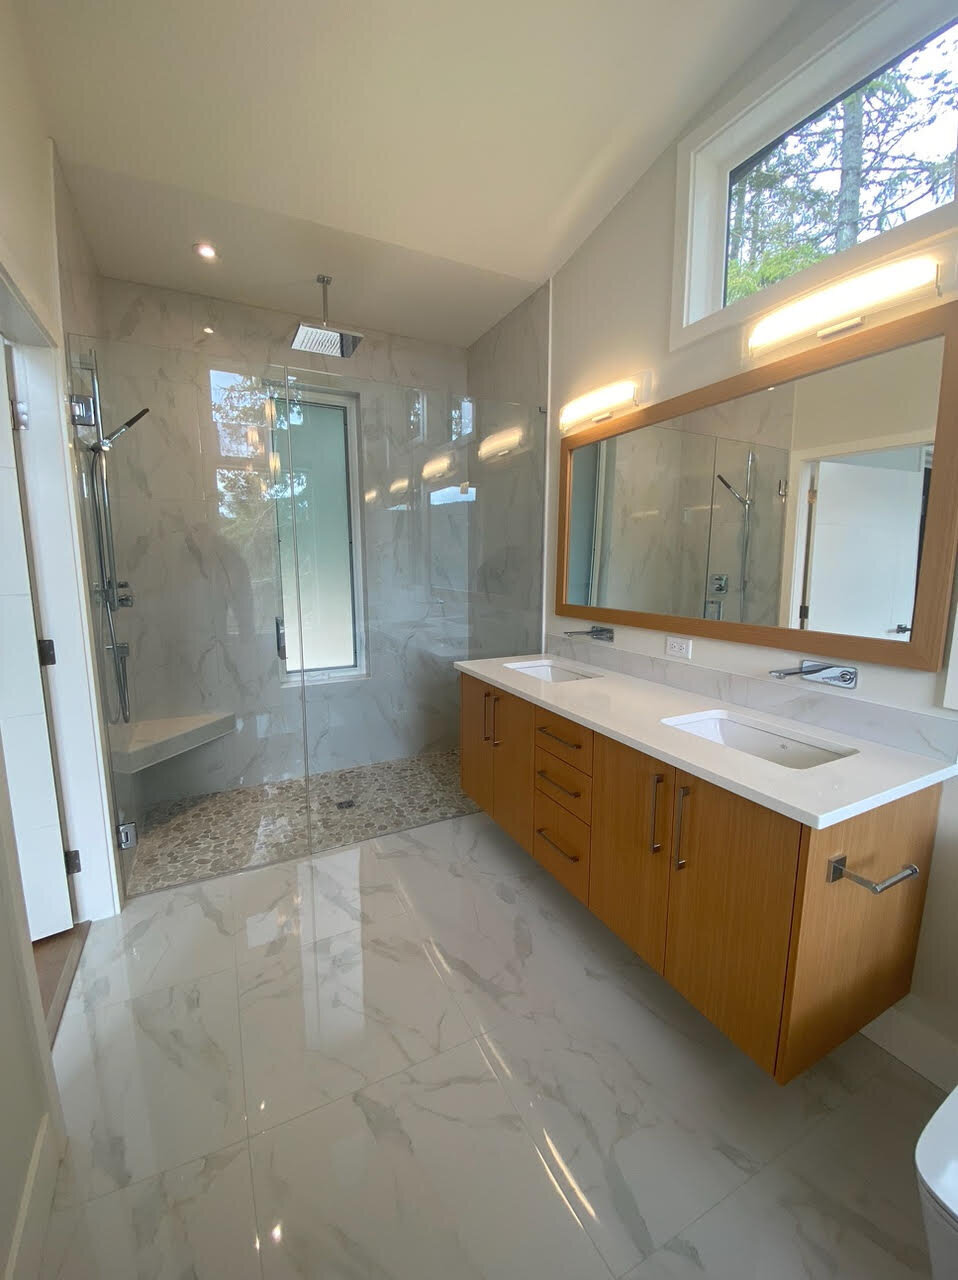 Modern ensuite design with wood vanity and walk-in shower design.